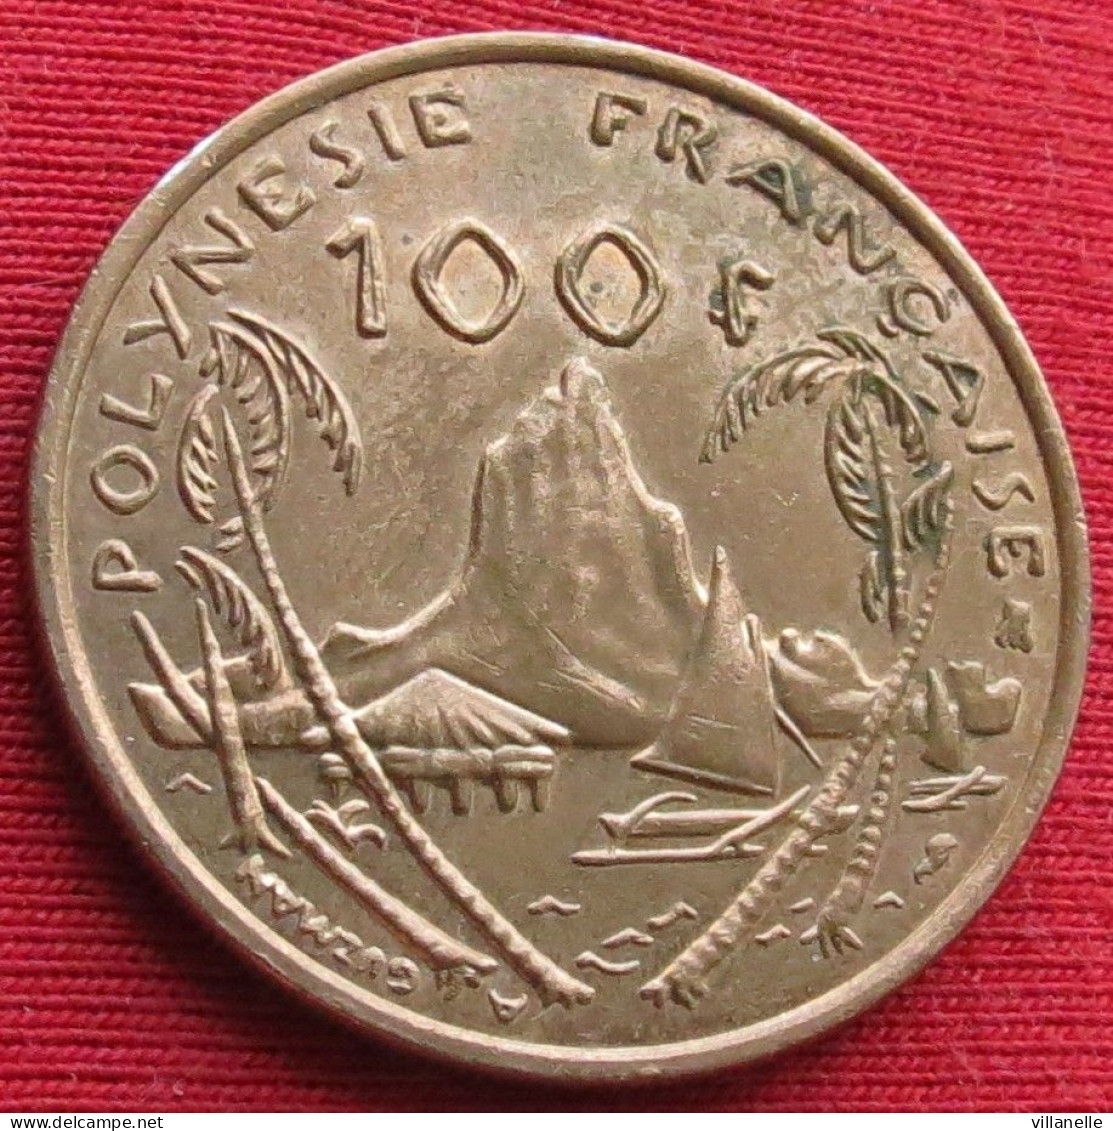 French Polynesia 100 Francs 1995 KM# 14 Lt 1567 *V1T Polynesie Polinesia - French Polynesia